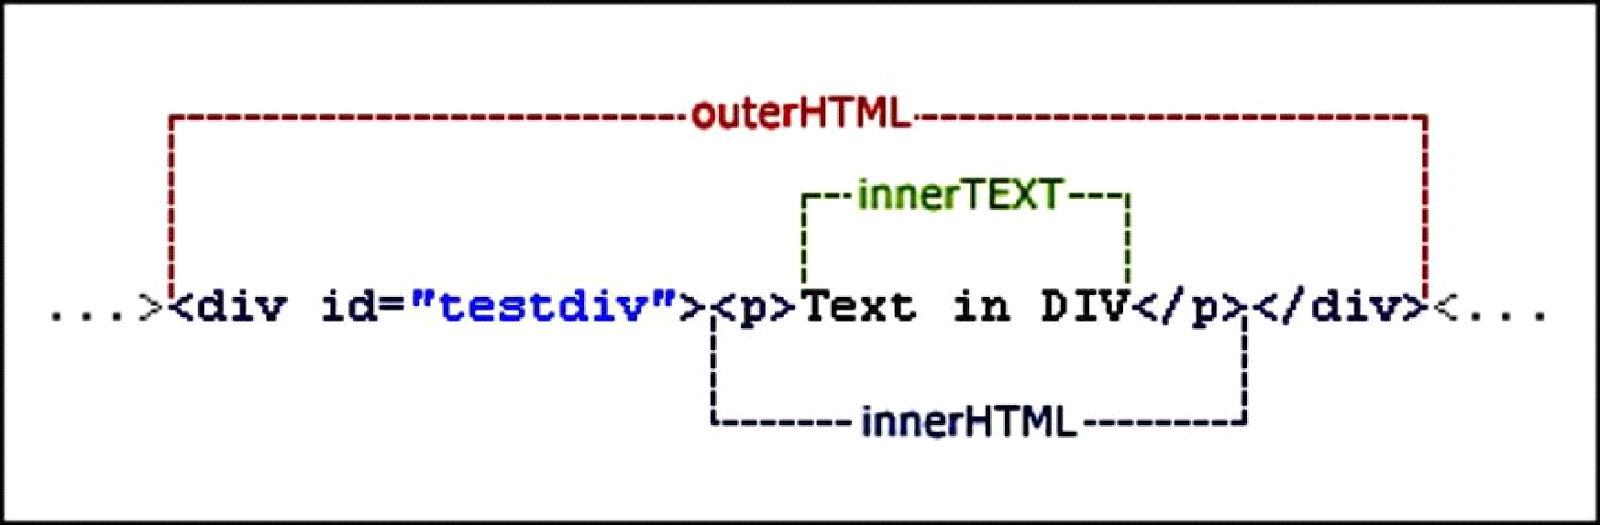 Image describing innerHTML, outerHTML, and innerText